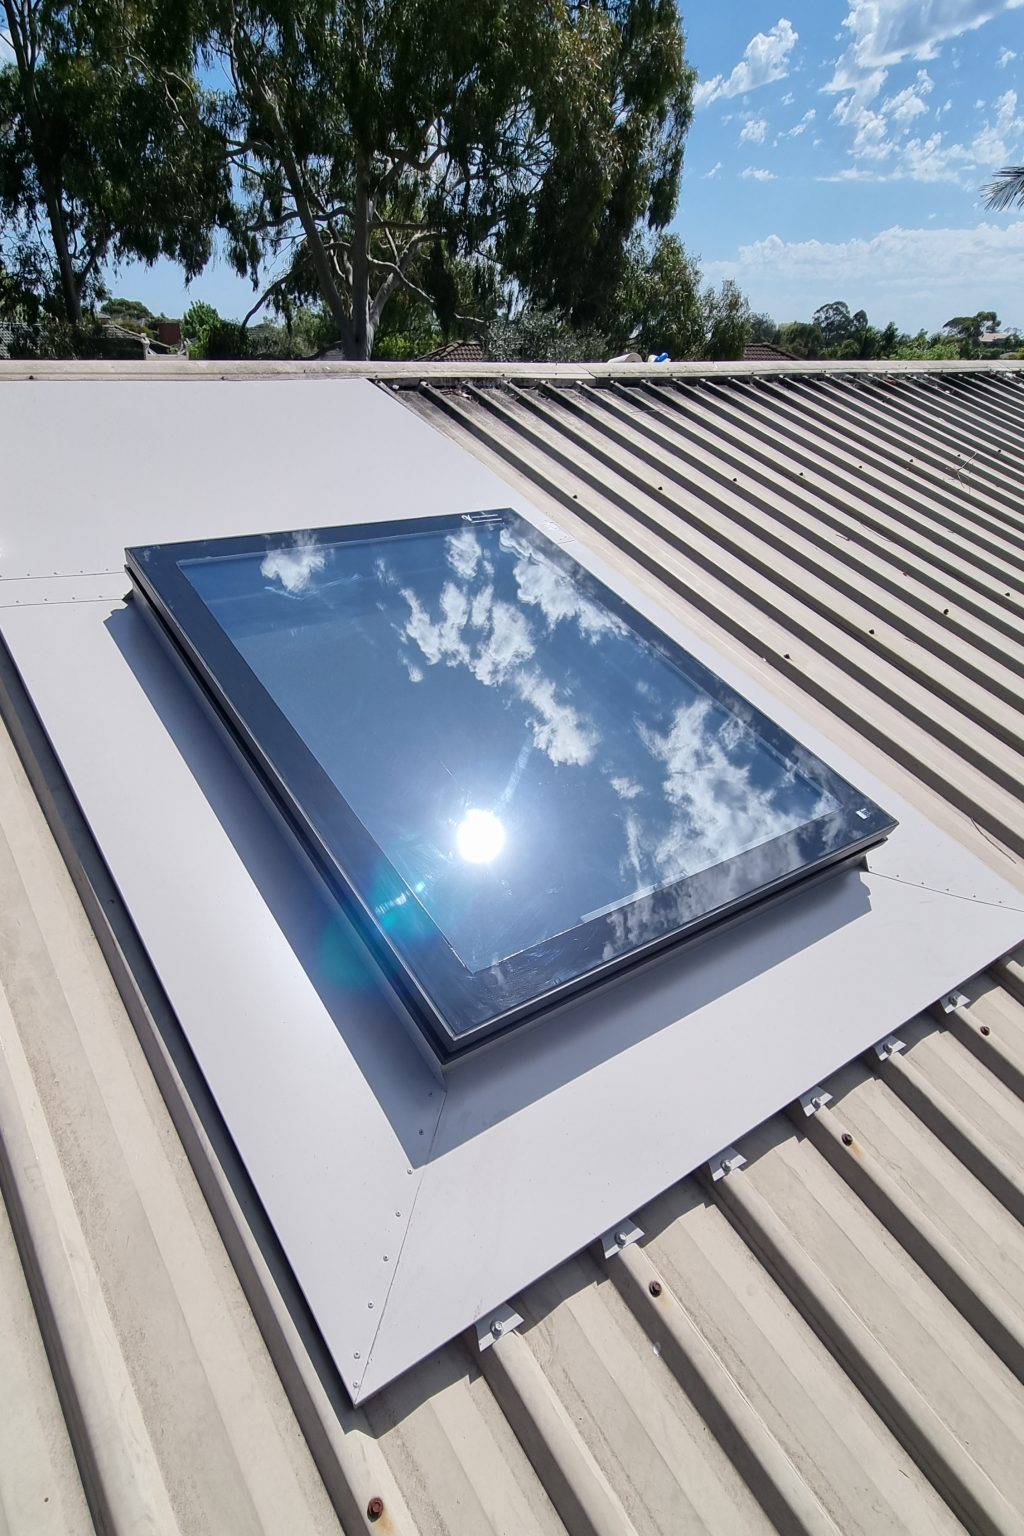 Operable skylight on metal roof